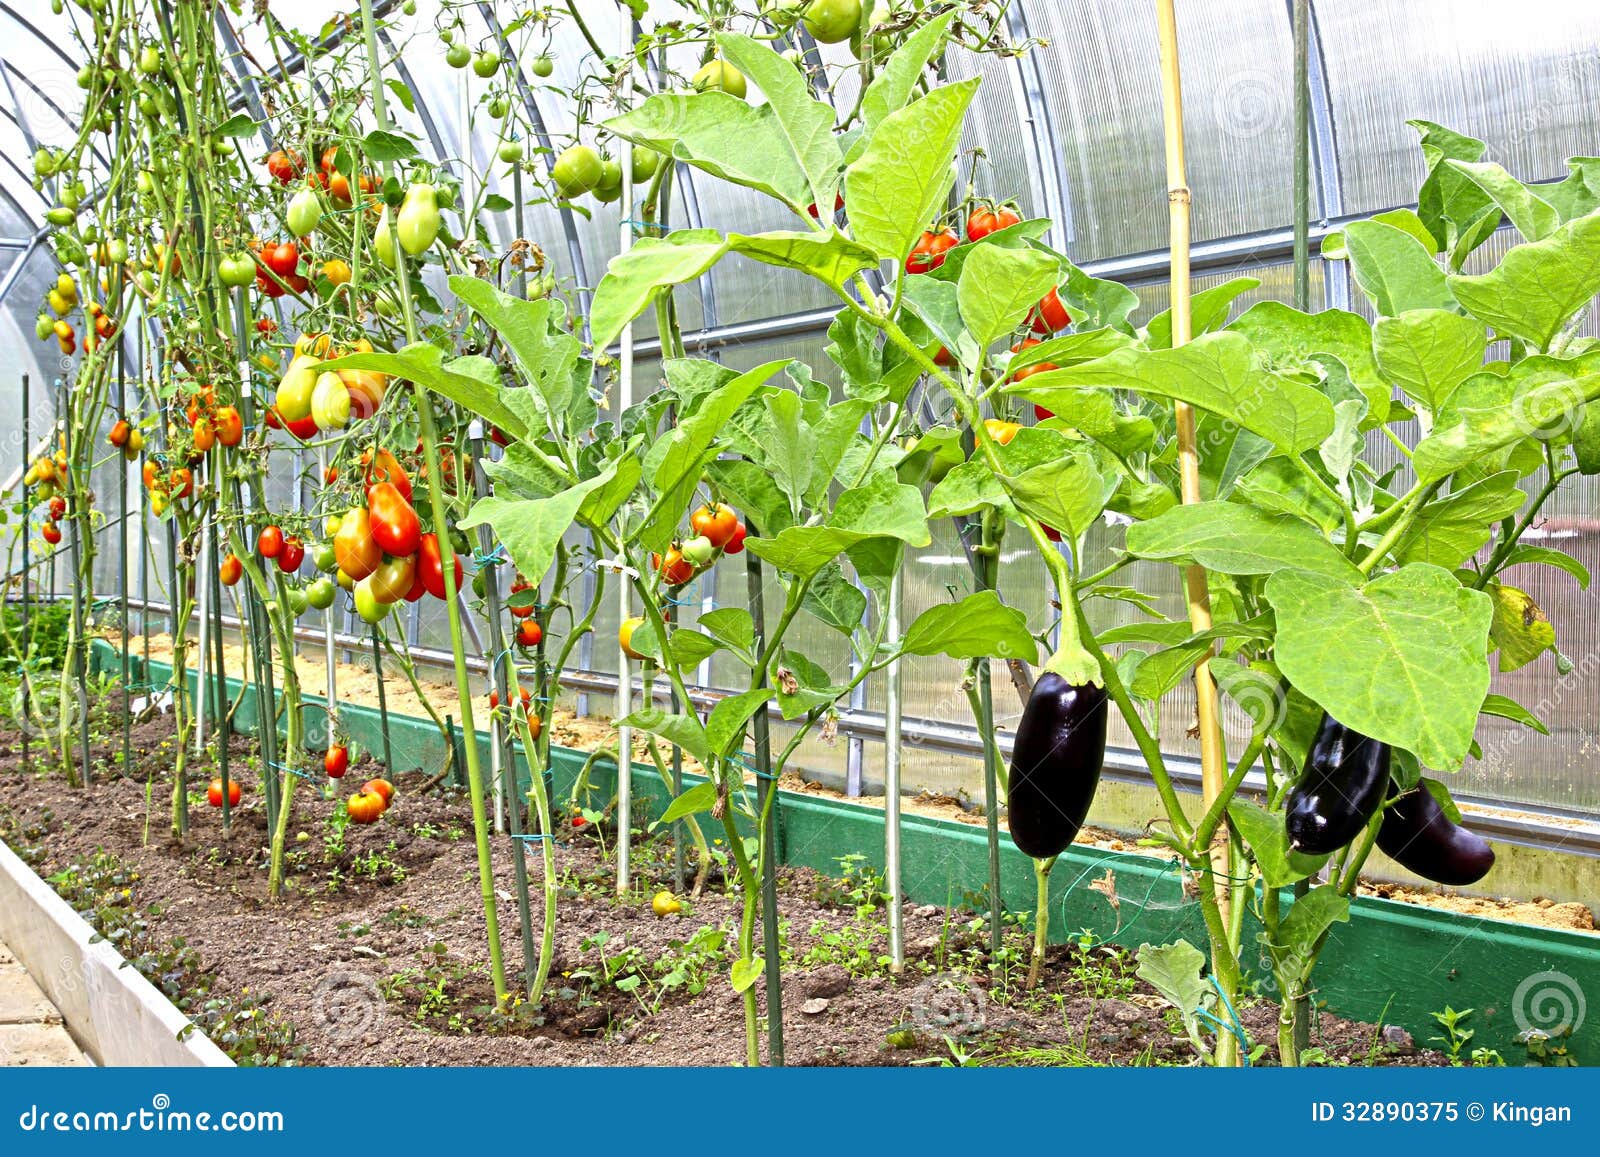 Tomatoes And Eggplants Stock Image Image Of Isolated 32890375